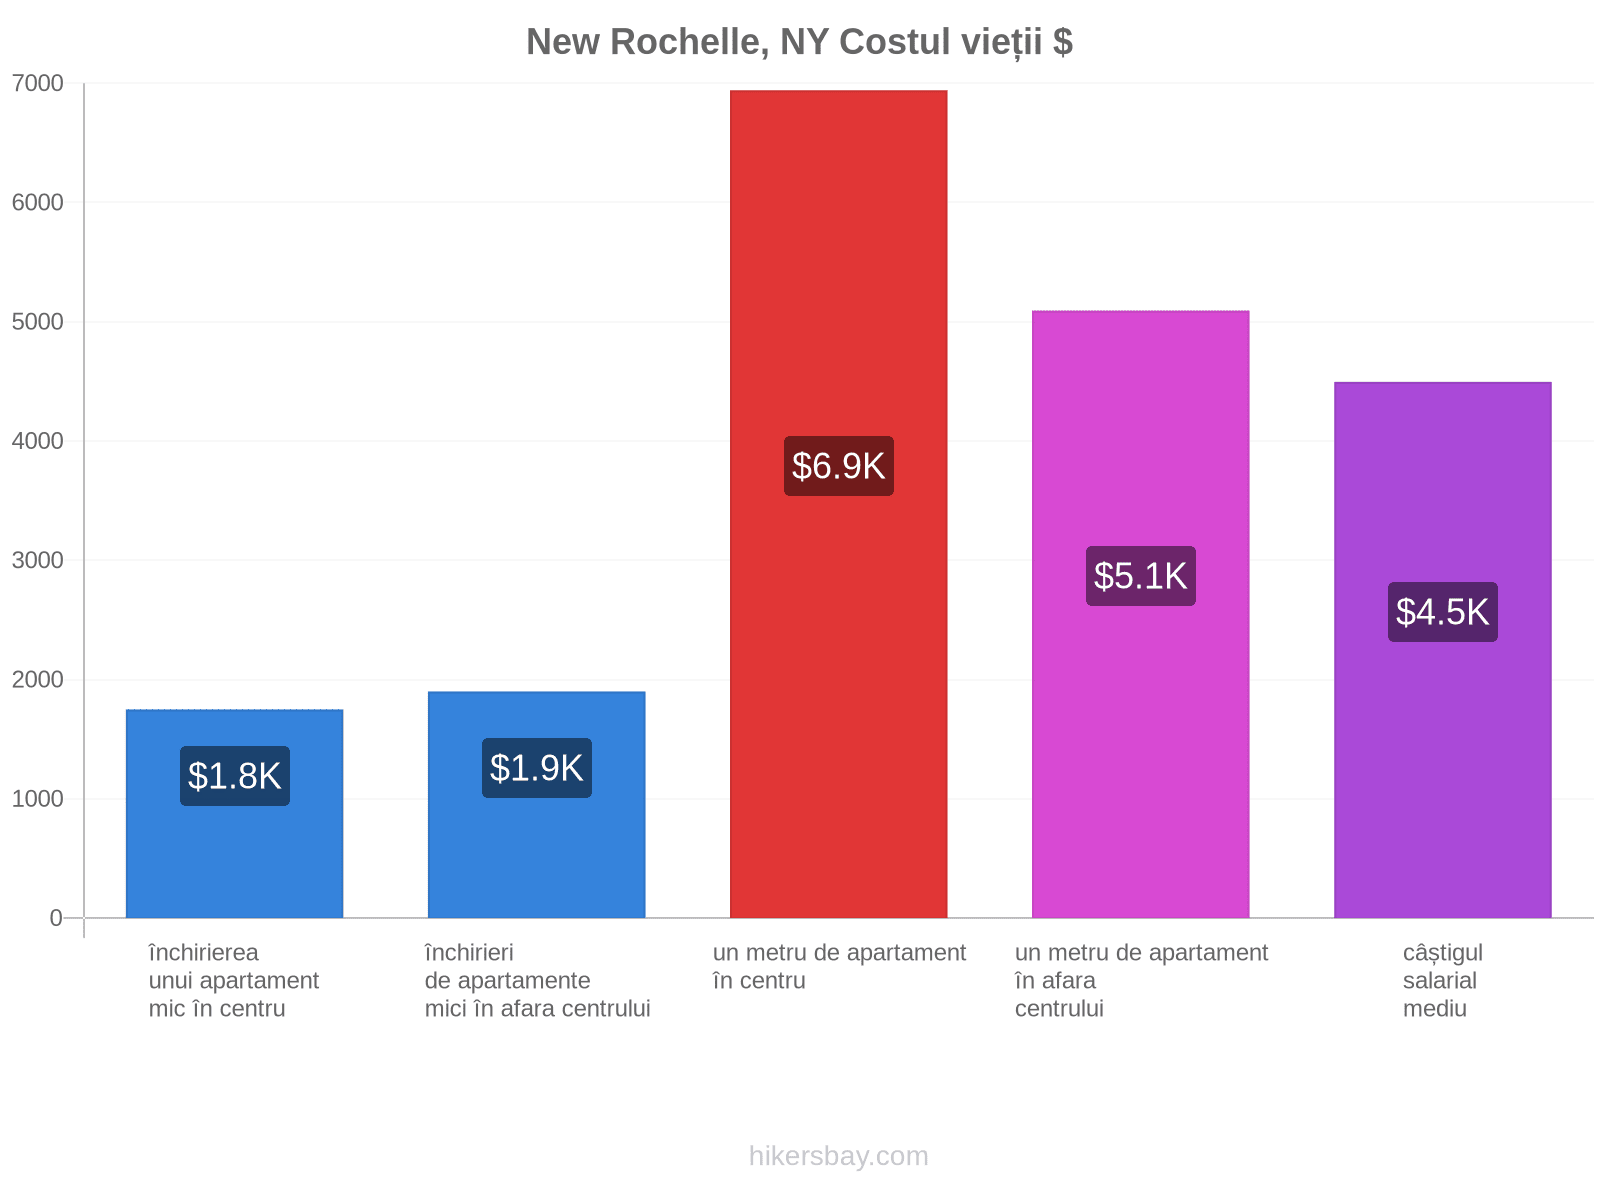 New Rochelle, NY costul vieții hikersbay.com